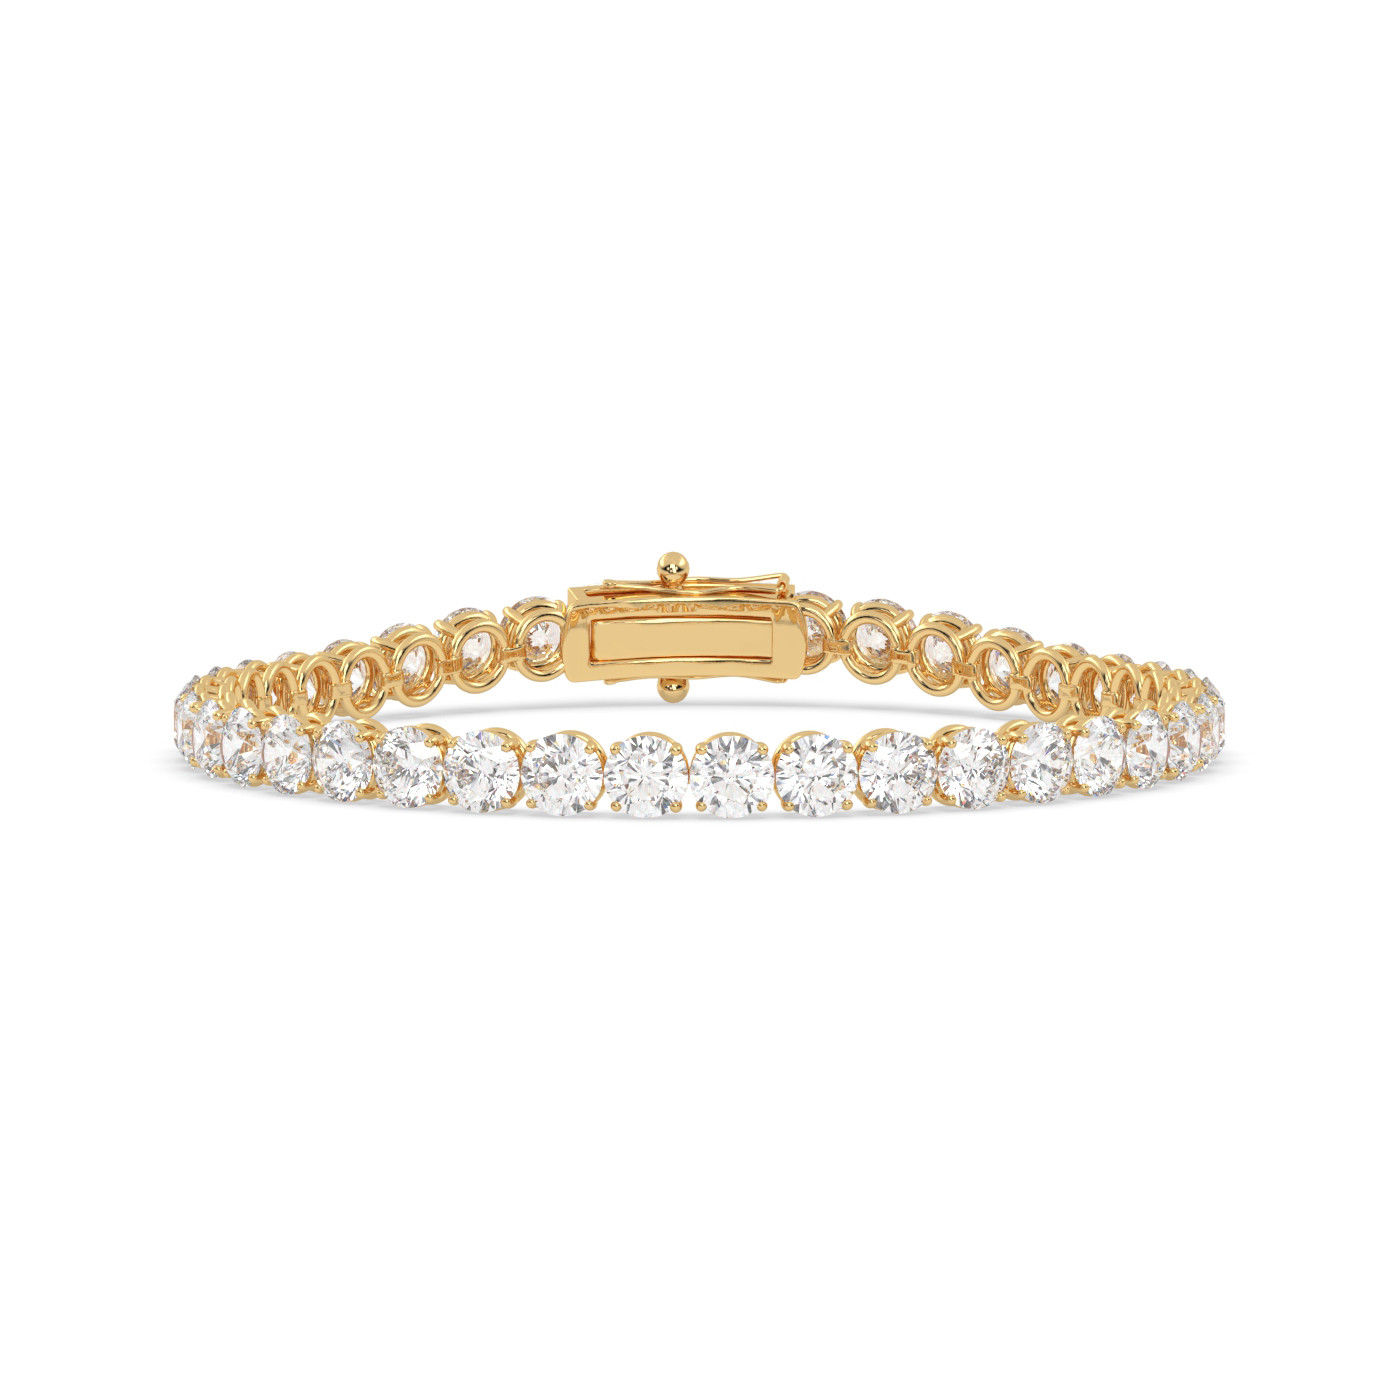 18k yellow gold 4.5 carat round diamond tennis bracelet with traditional lock sytem Photos & images